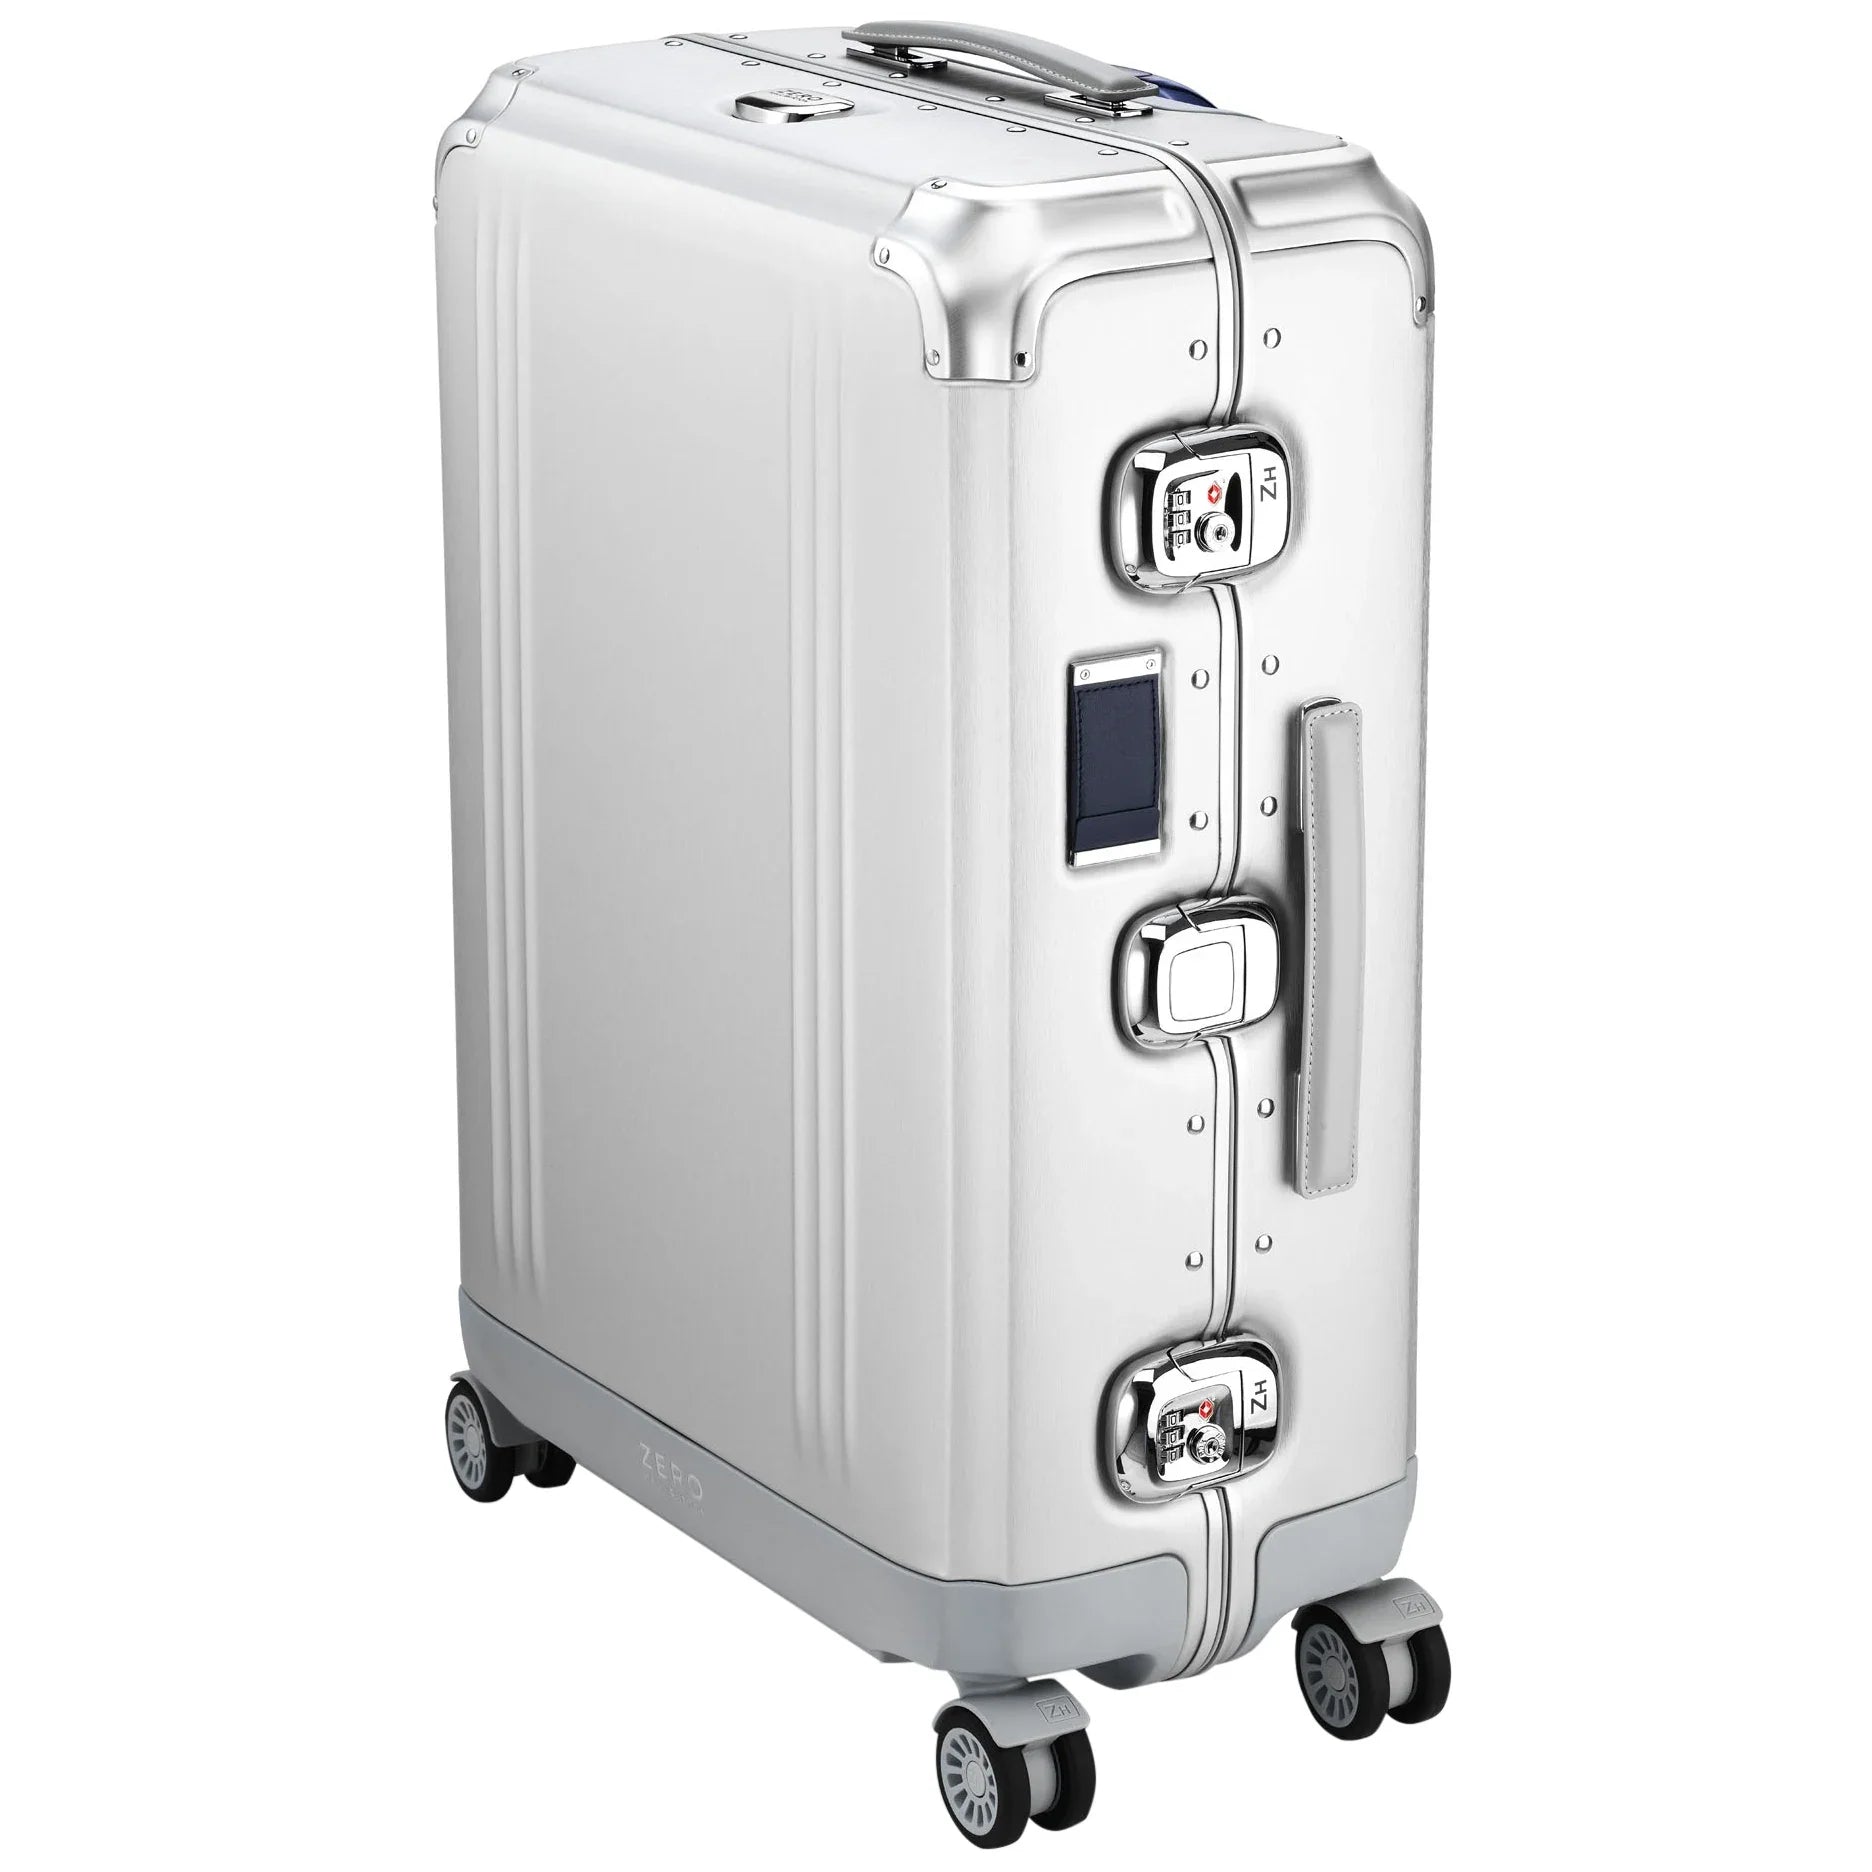 Zero Halliburton Pursuit Check In Luggage 4-Rollen Trolley 66 cm - Silver